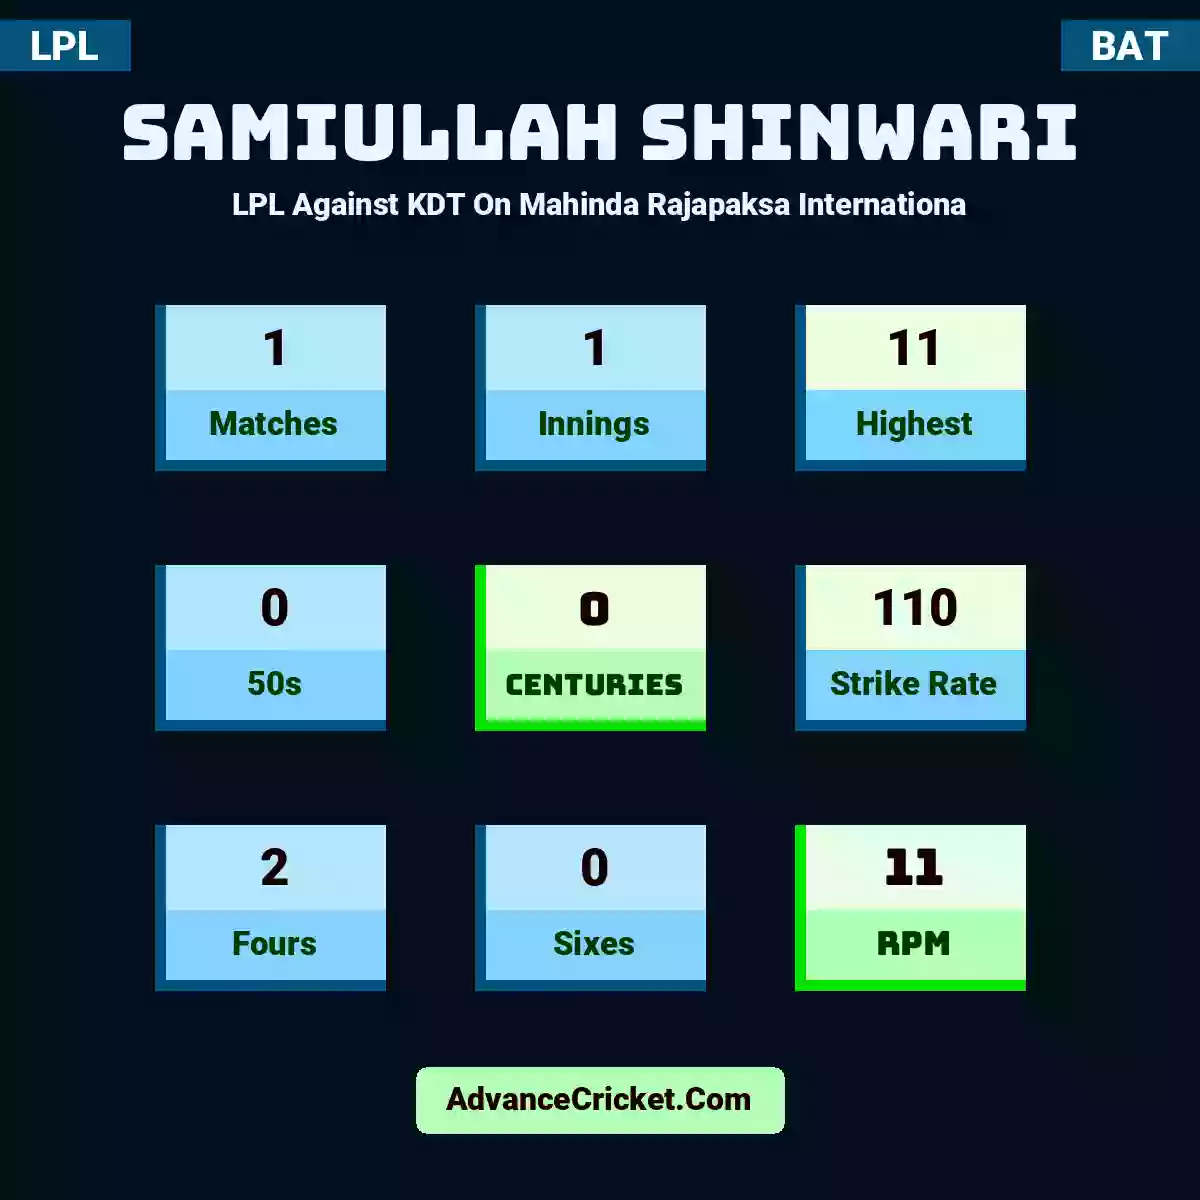 Samiullah Shinwari LPL  Against KDT On Mahinda Rajapaksa Internationa, Samiullah Shinwari played 1 matches, scored 11 runs as highest, 0 half-centuries, and 0 centuries, with a strike rate of 110. S.Shinwari hit 2 fours and 0 sixes, with an RPM of 11.